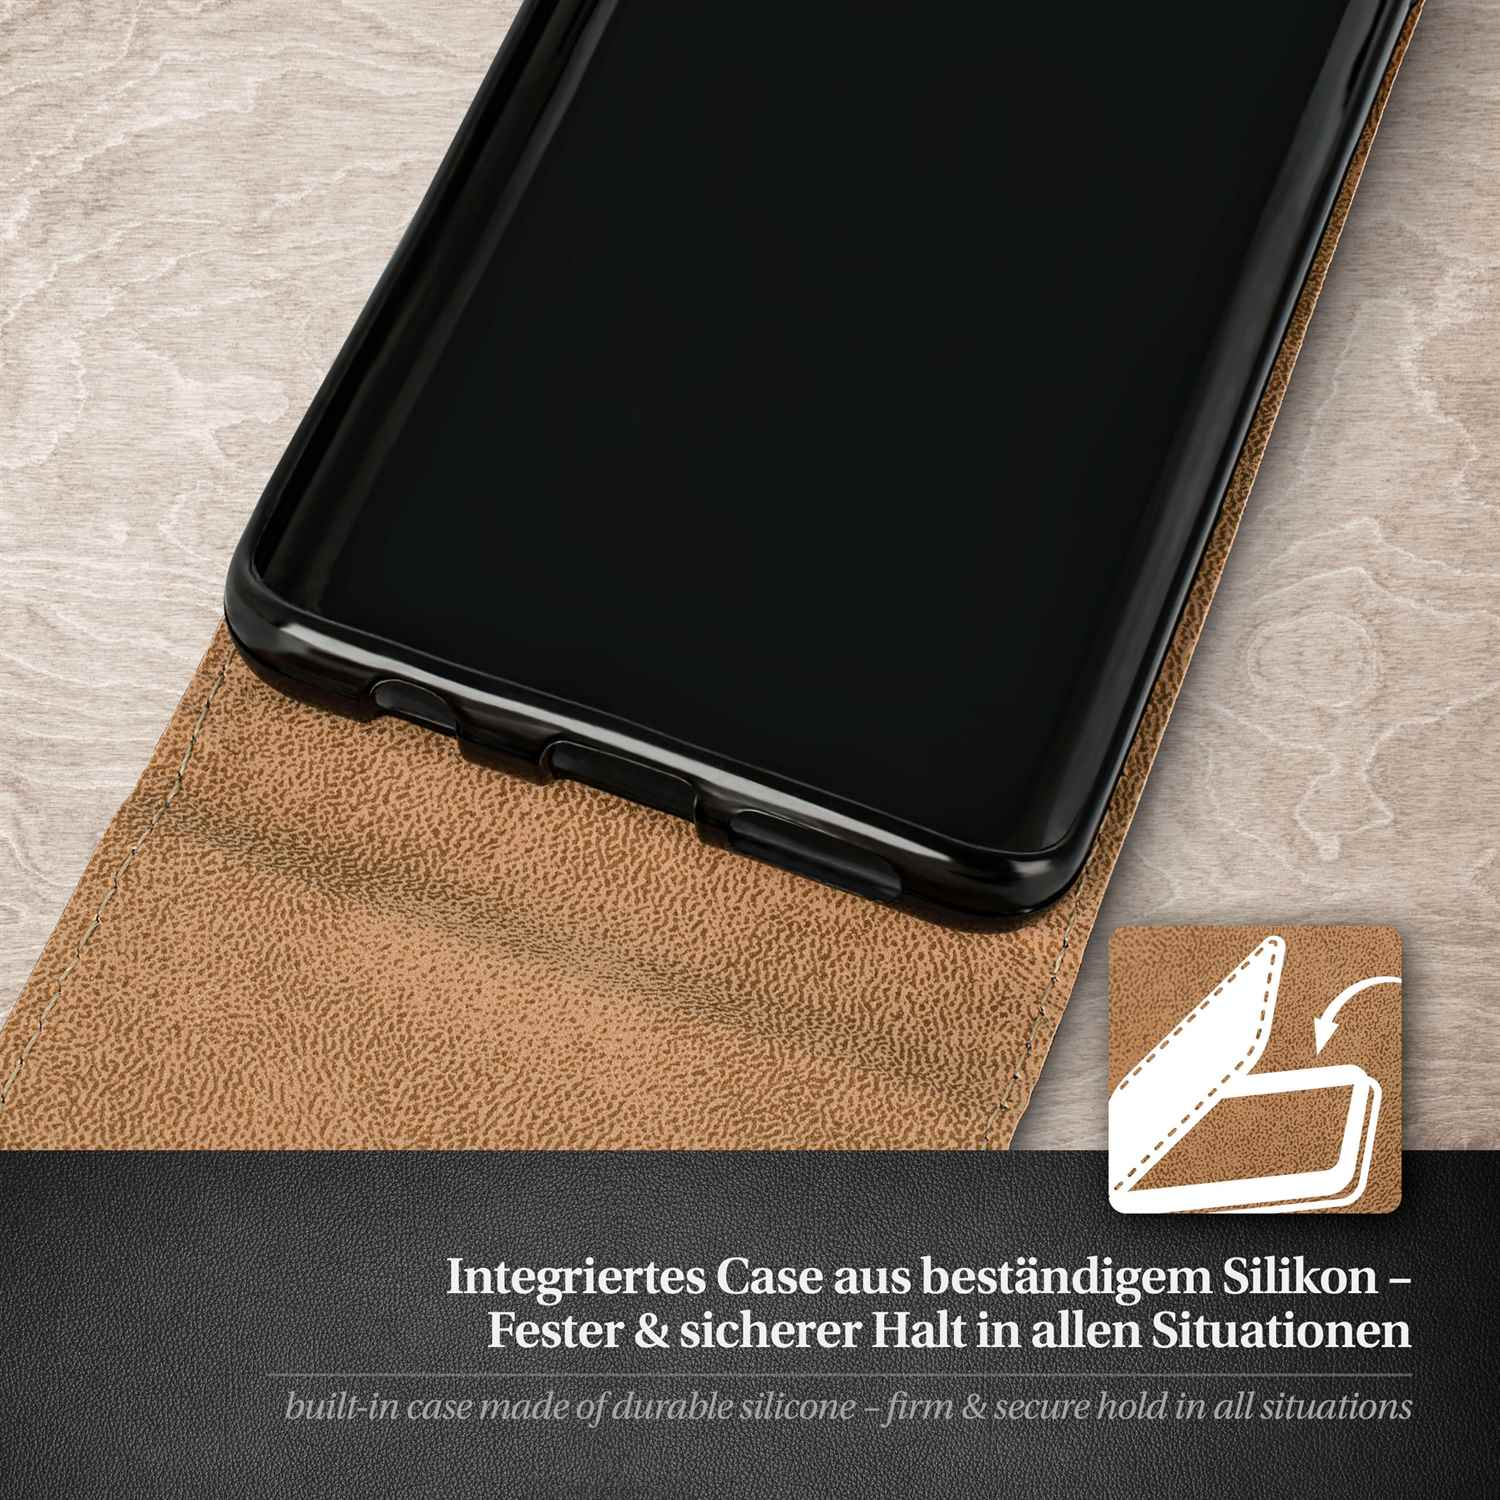 MOEX Flip Case, Flip Cover, Samsung, Mini, S5 Galaxy Oxide-Brown